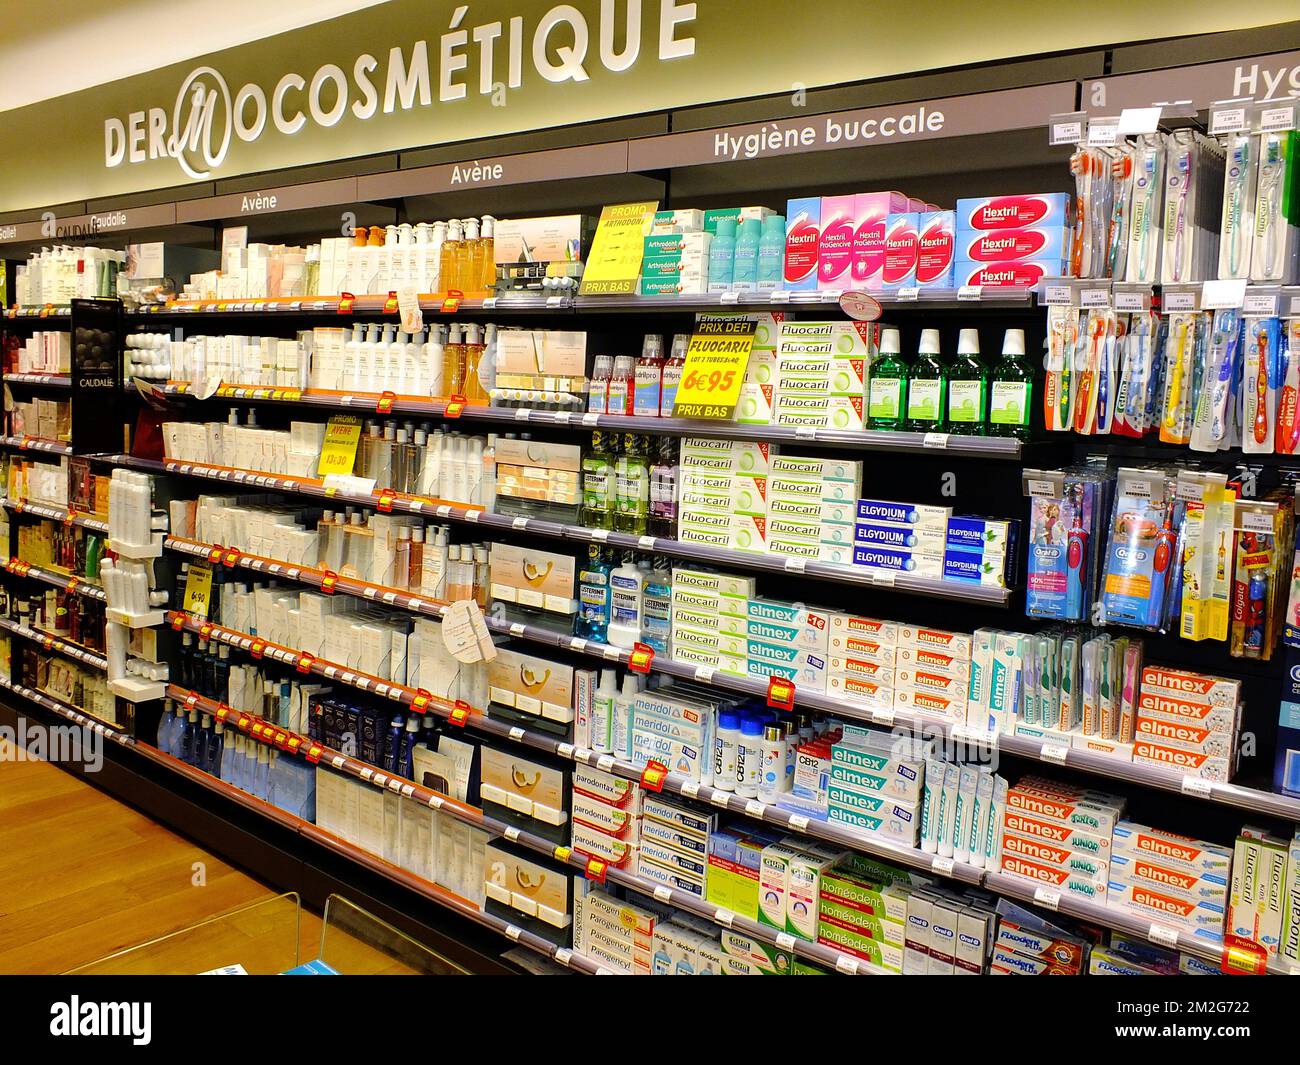 Pharmacy | Pharmacie rayon dermocosmétique 23/06/2018 Stock Photo